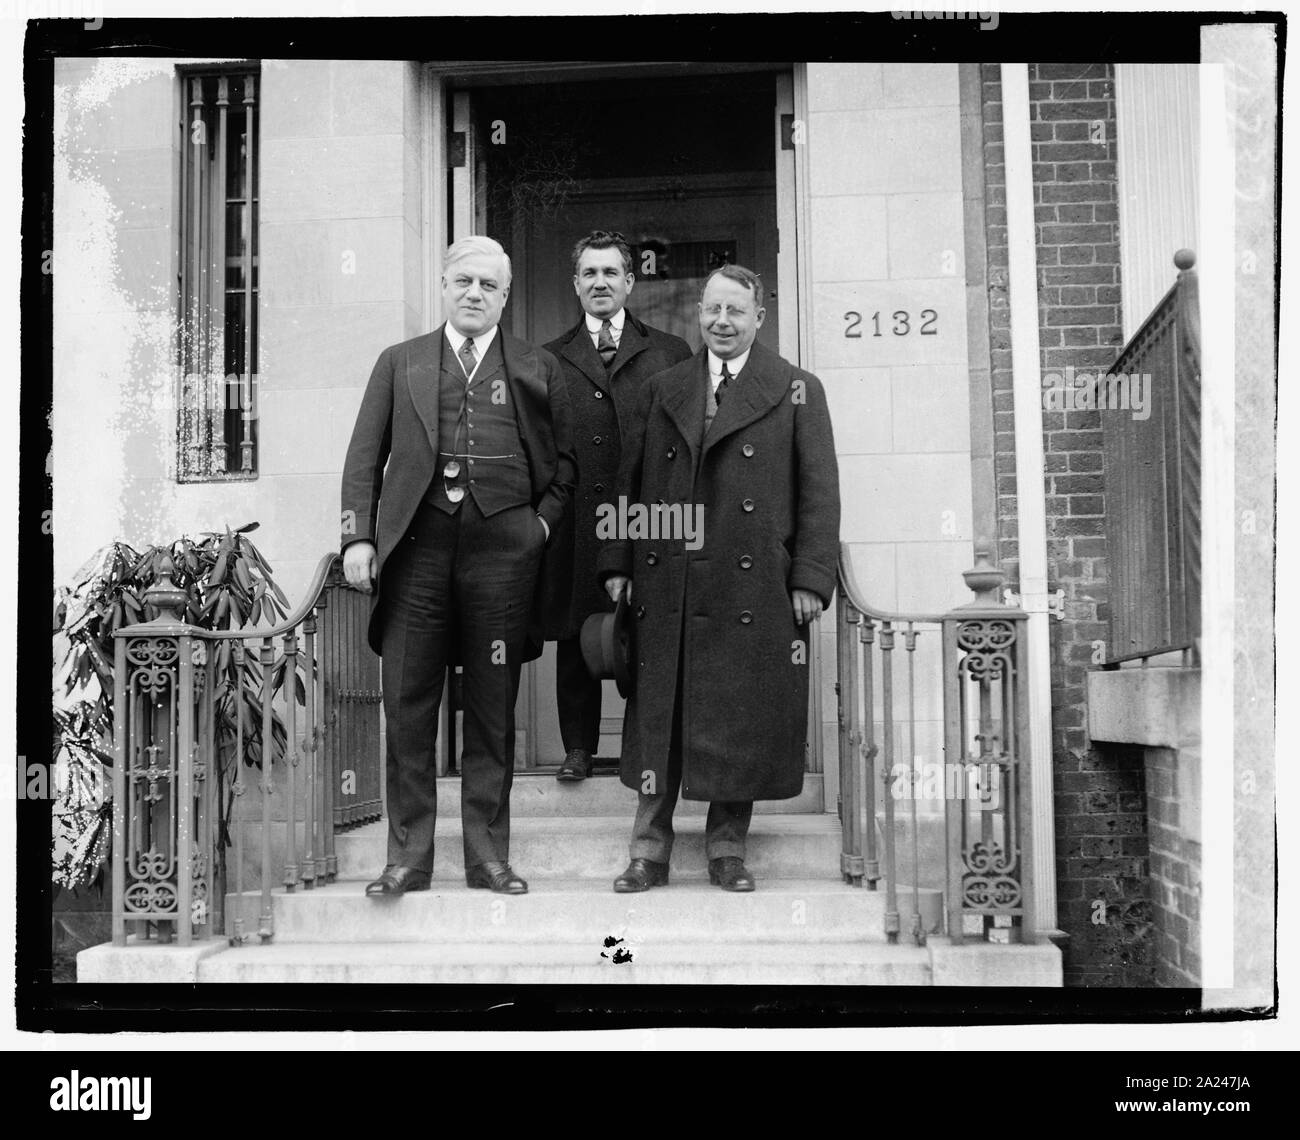 Palmer, Ansberry, & Cox, 1/27/21 Stock Photo